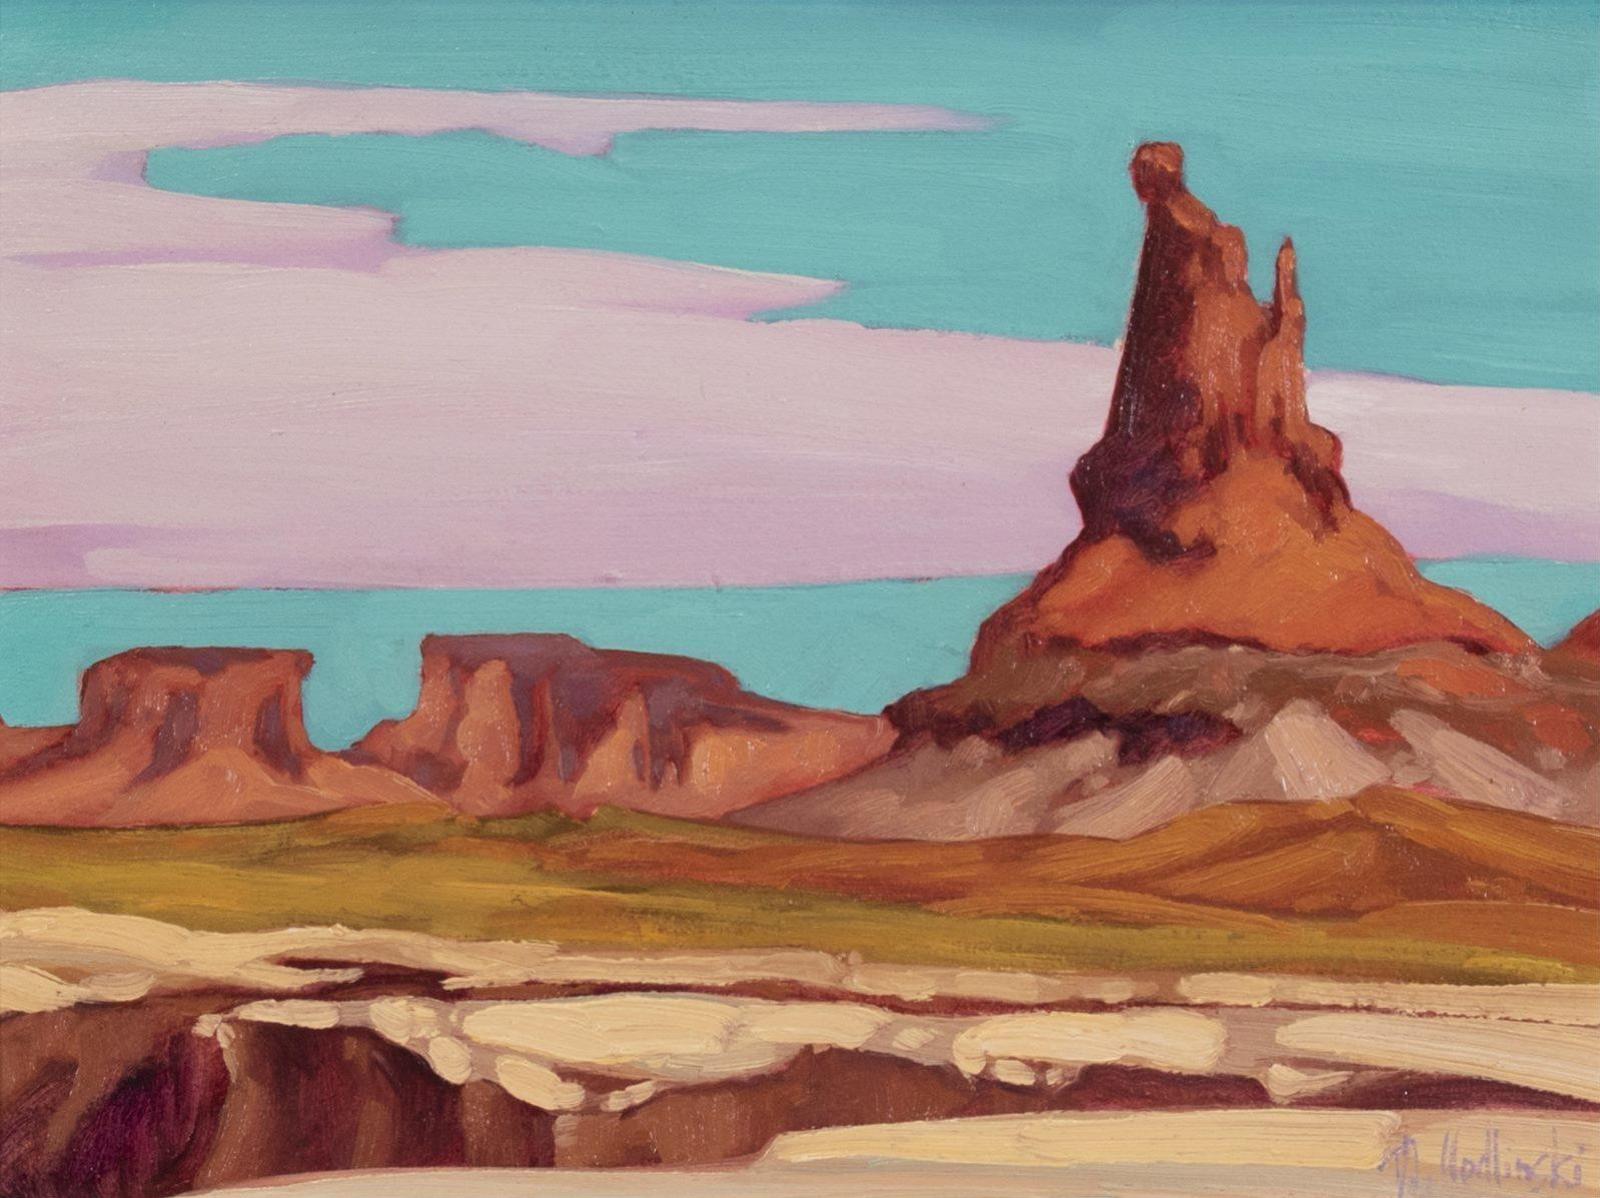 Dominik J. Modlinski (1970) - White Rim, Canyonlands N. P. Utah; 2005